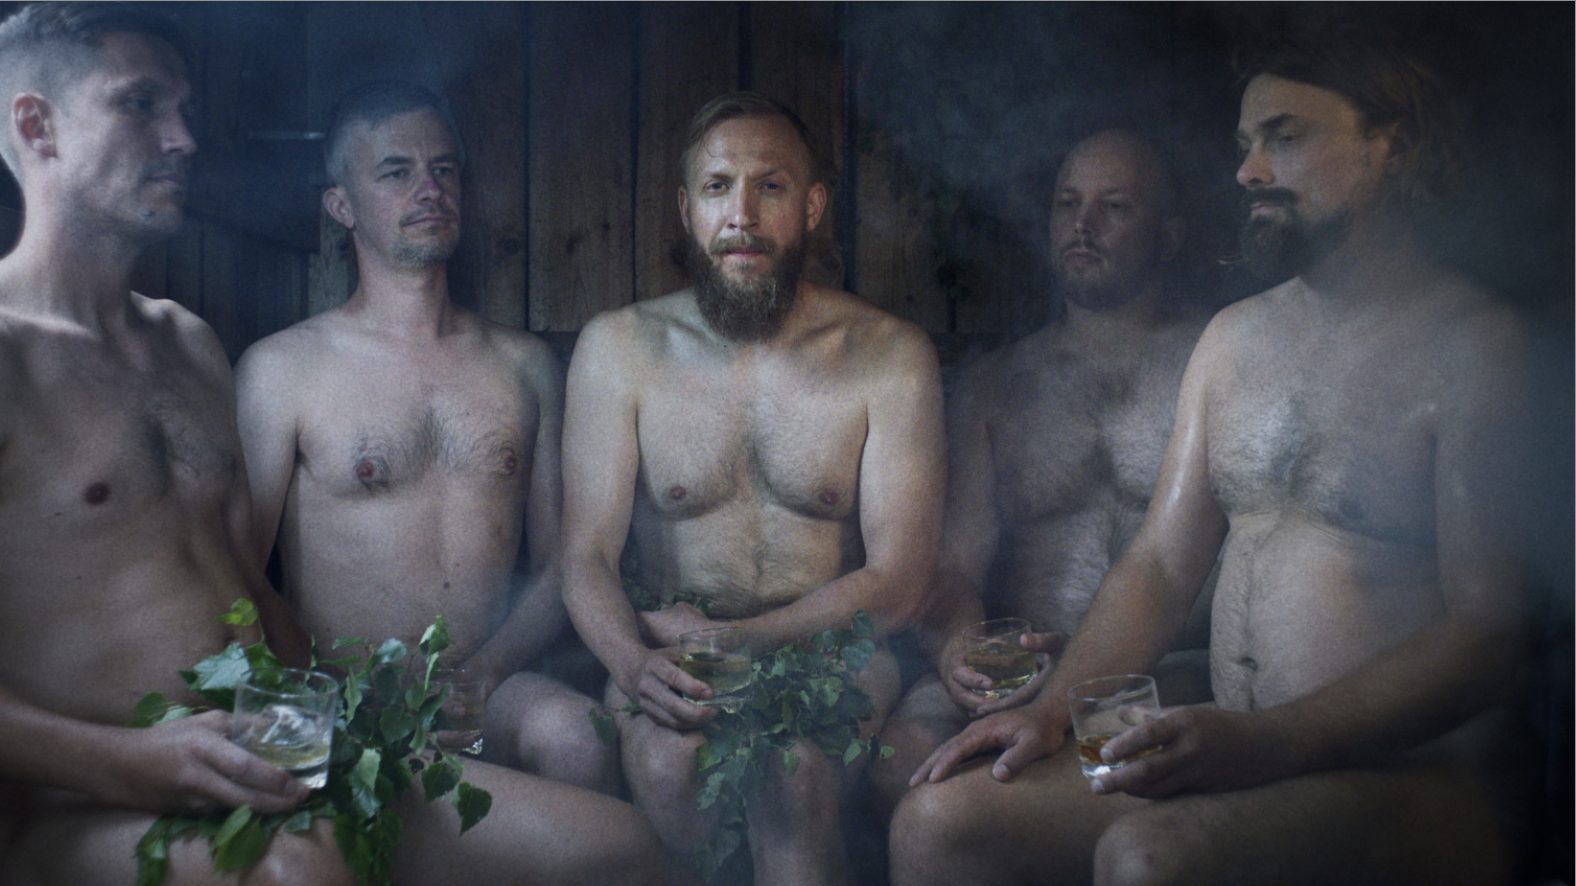 Five men sit in a finnish sauna naked.